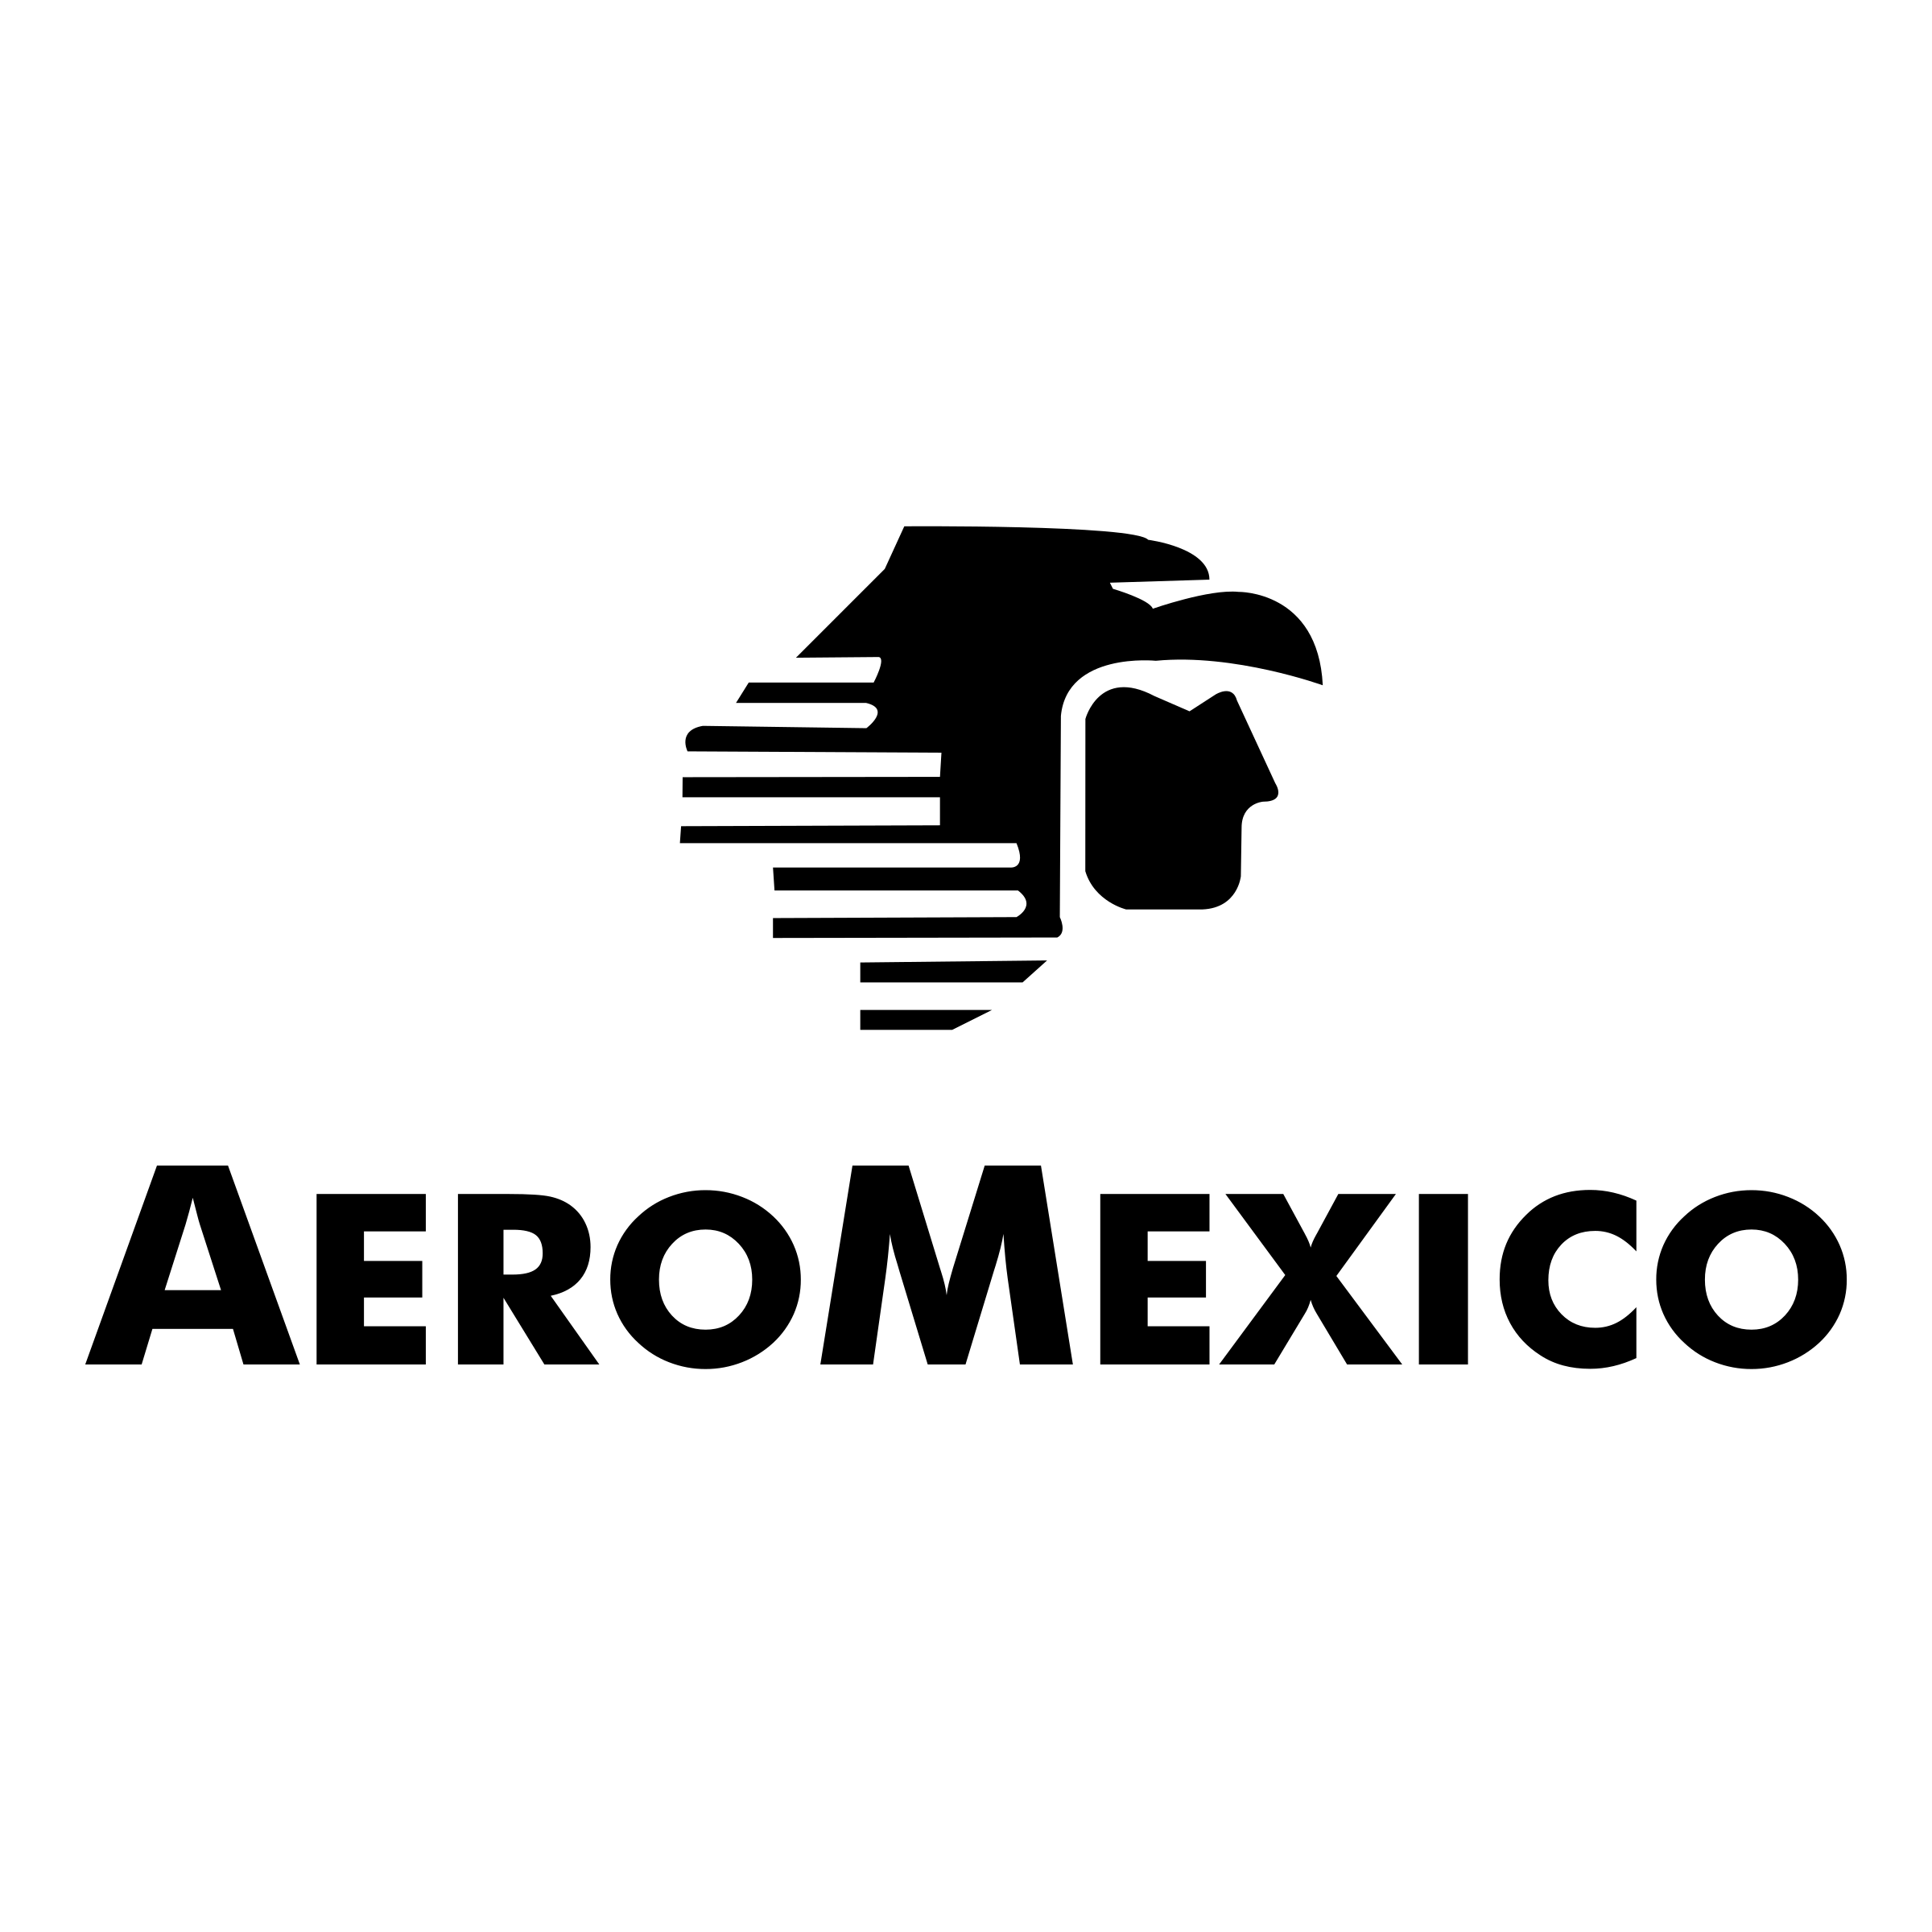 Aeromexico Logo - AeroMexico Logo PNG Transparent & SVG Vector